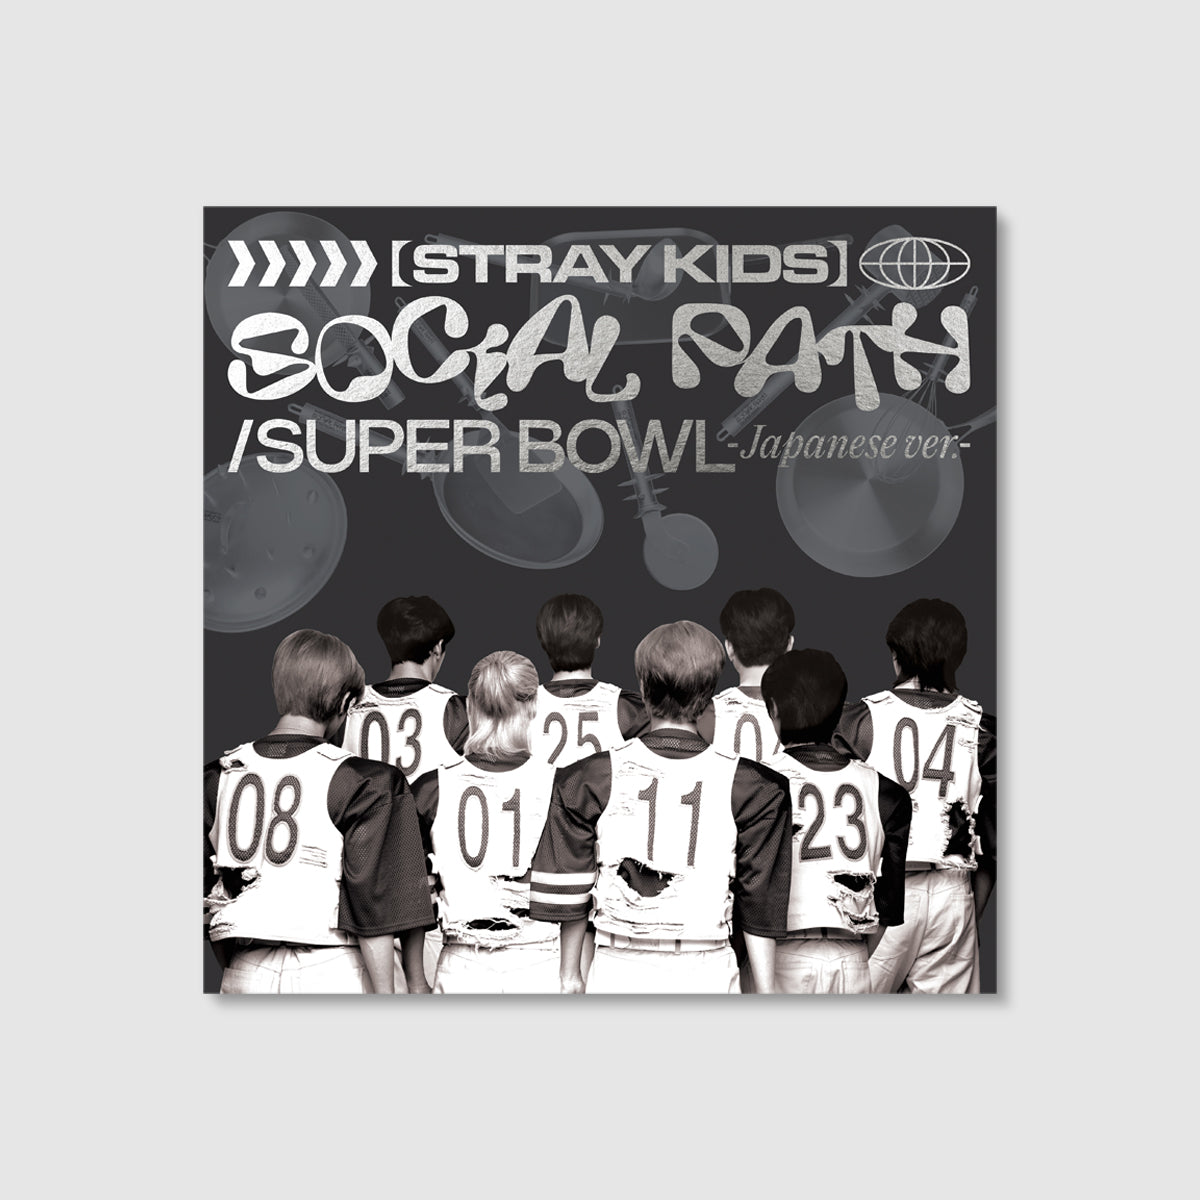 Stray Kids - Social Path (feat. LiSA) / Super Bowl -Japanese ver.-